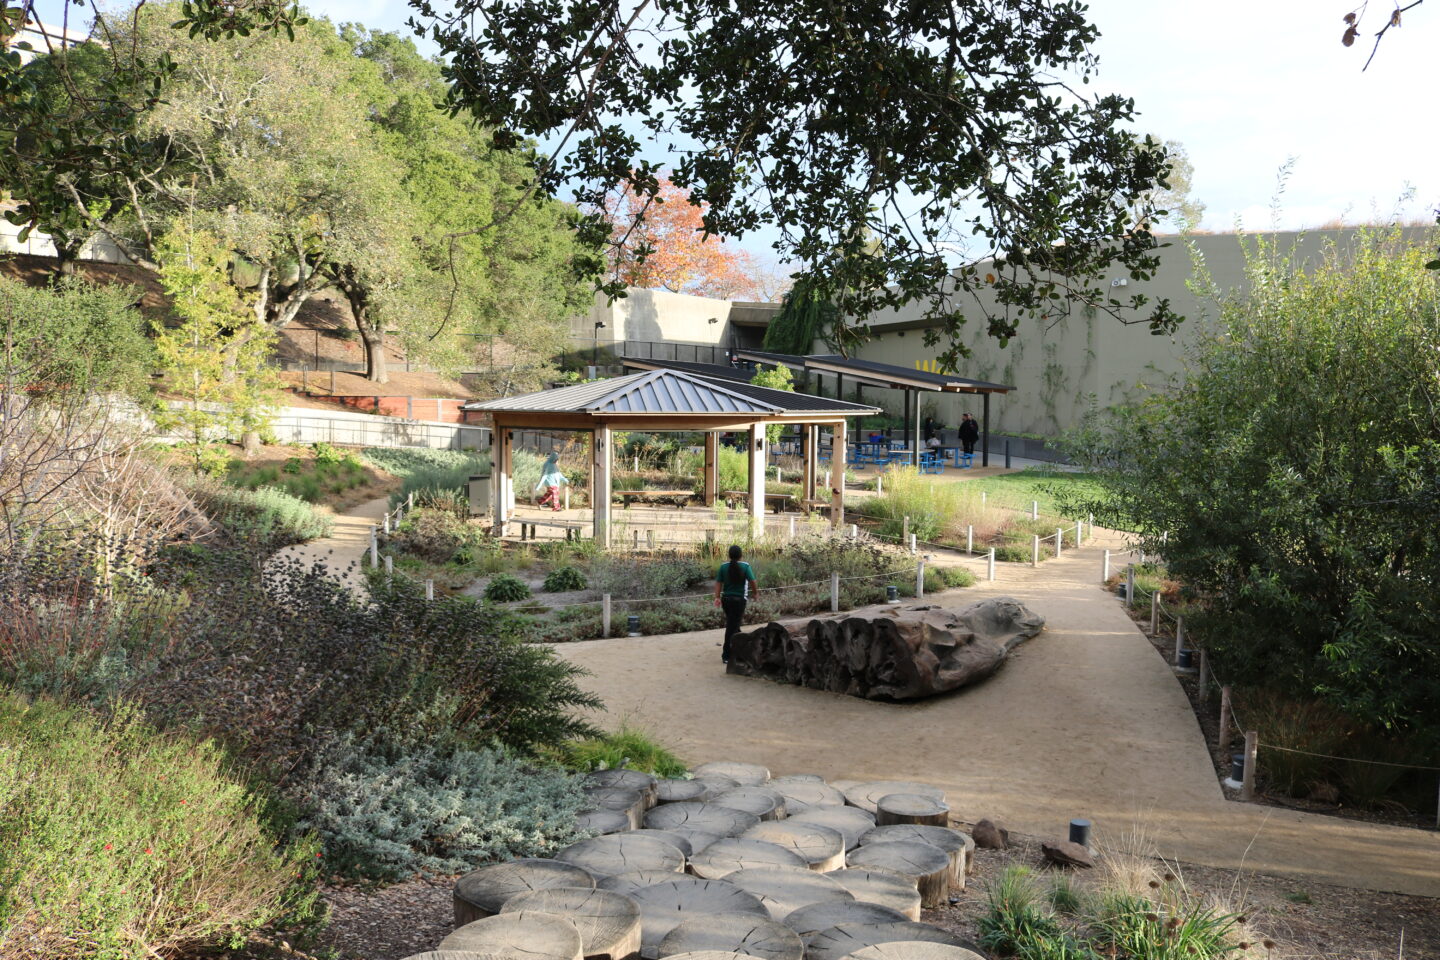 The Outdoor Nature Lab pavilion